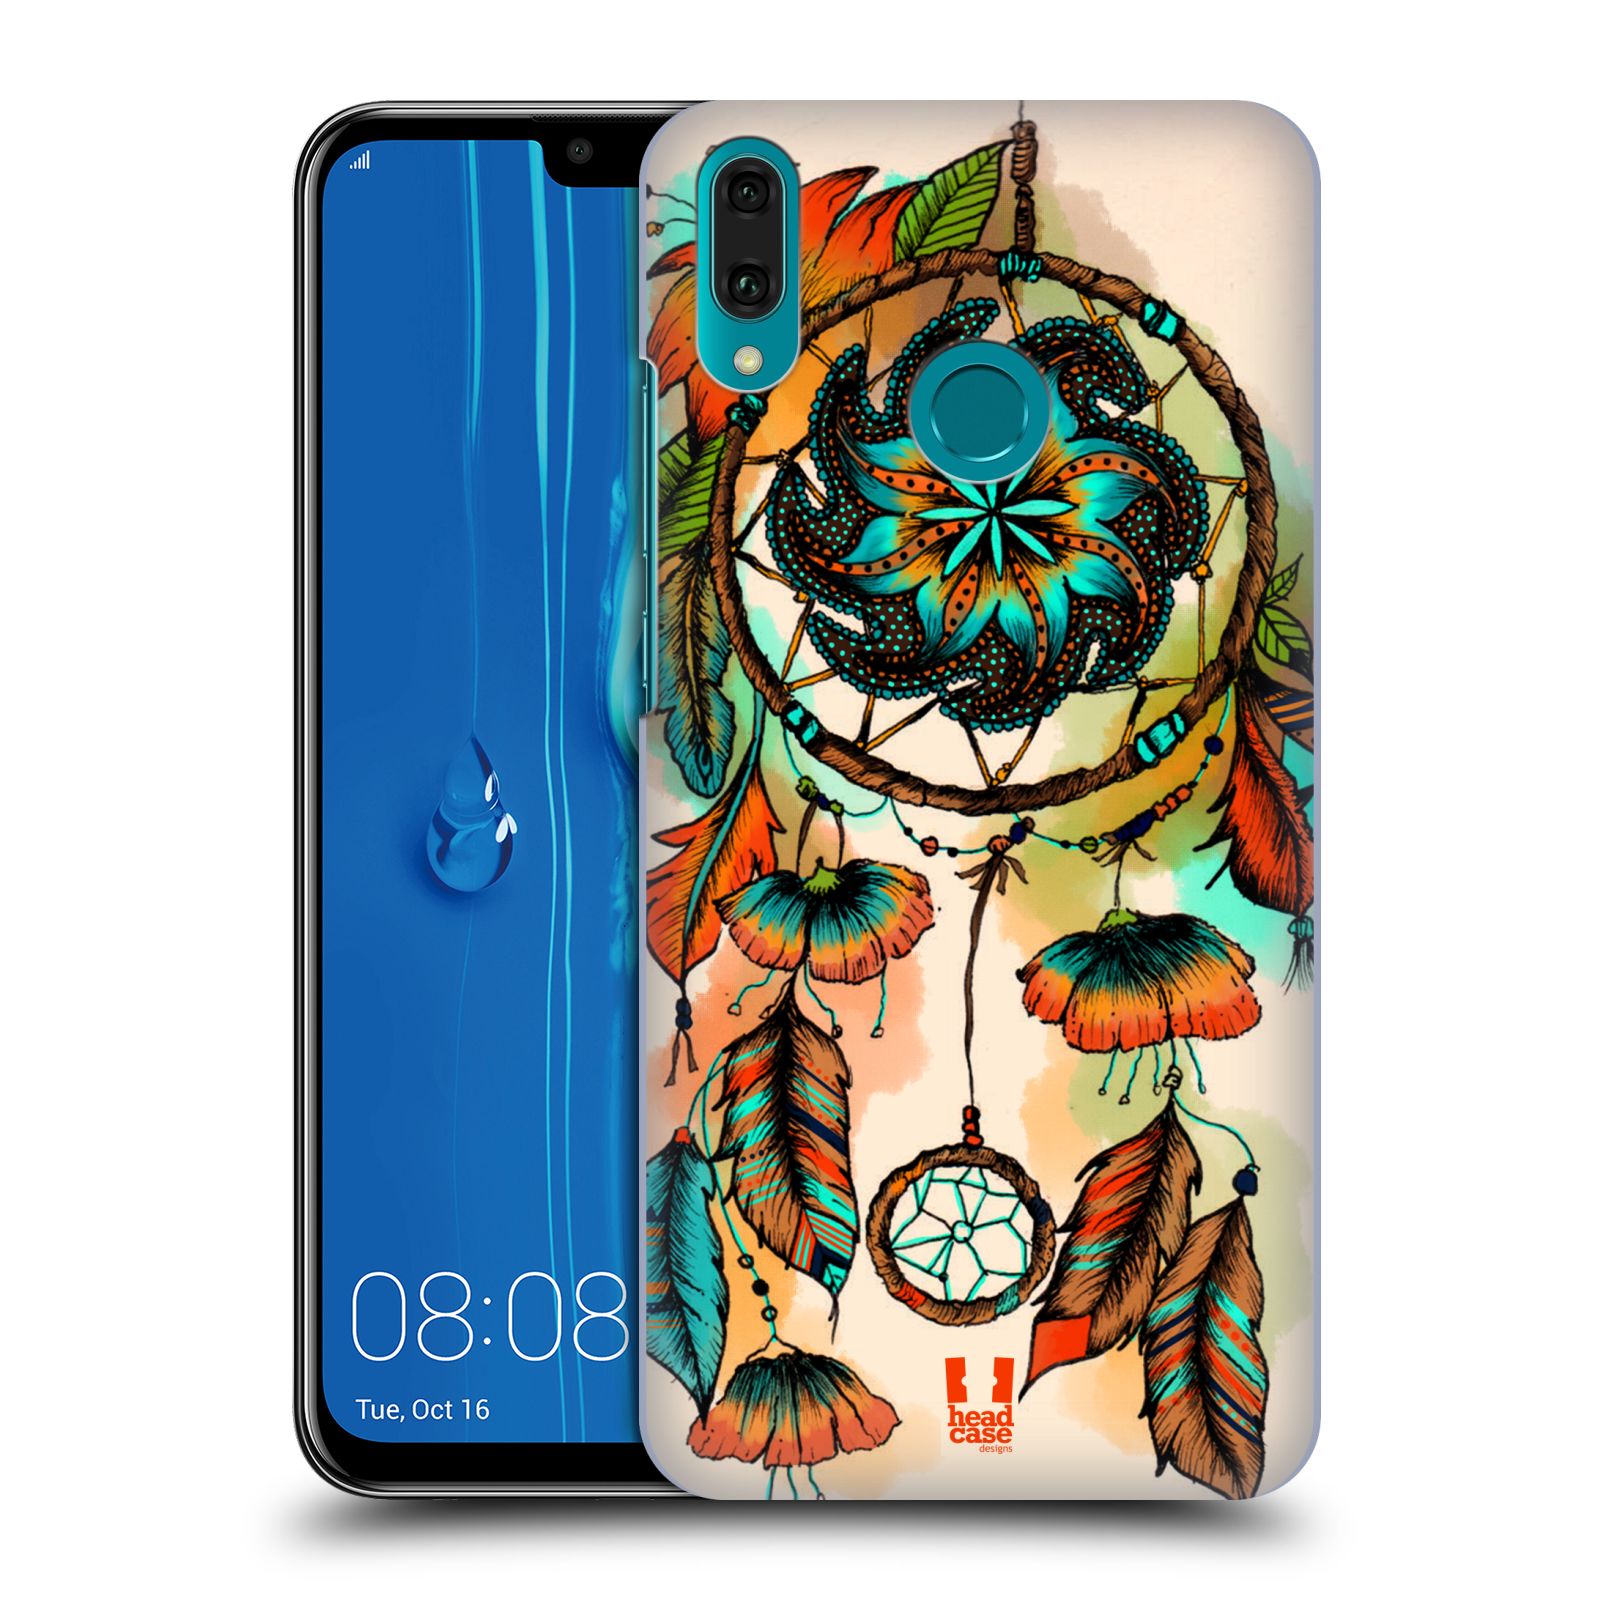 Pouzdro na mobil Huawei Y9 2019 - HEAD CASE - vzor Květy lapač snů merňka oranžová